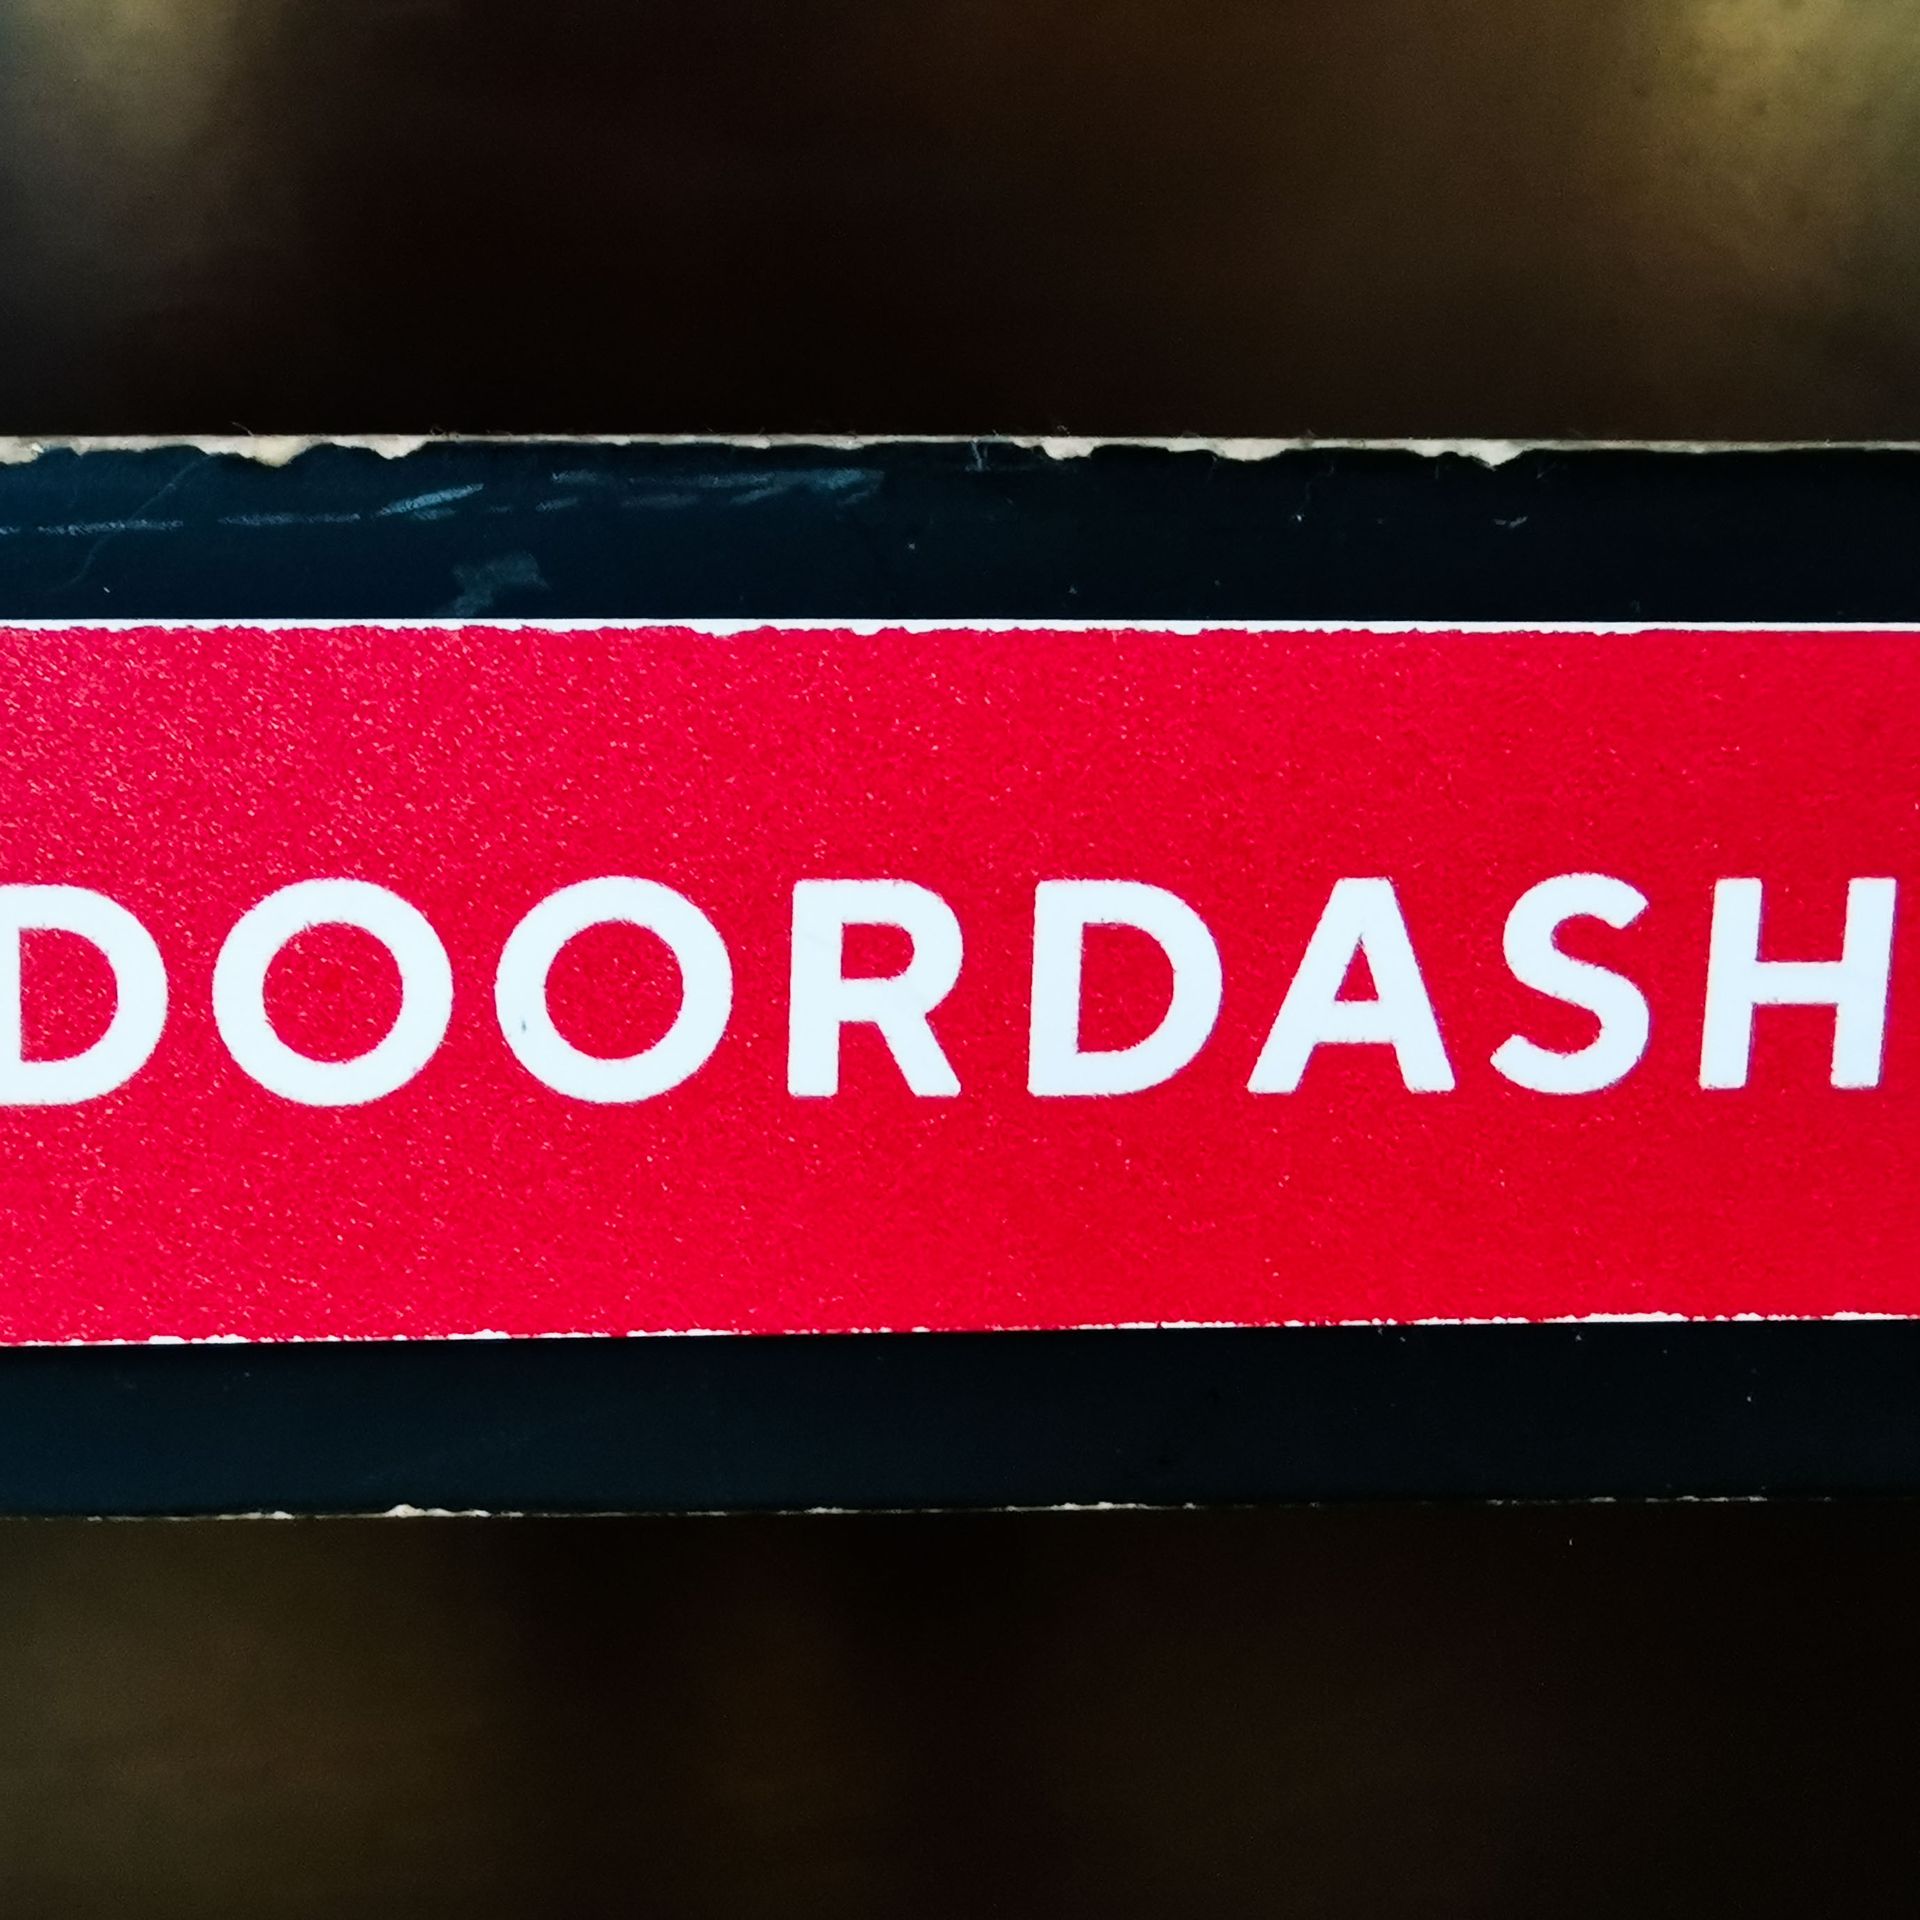 DoorDash, Wonder Layoffs Are Another Sign Tech Companies Don't